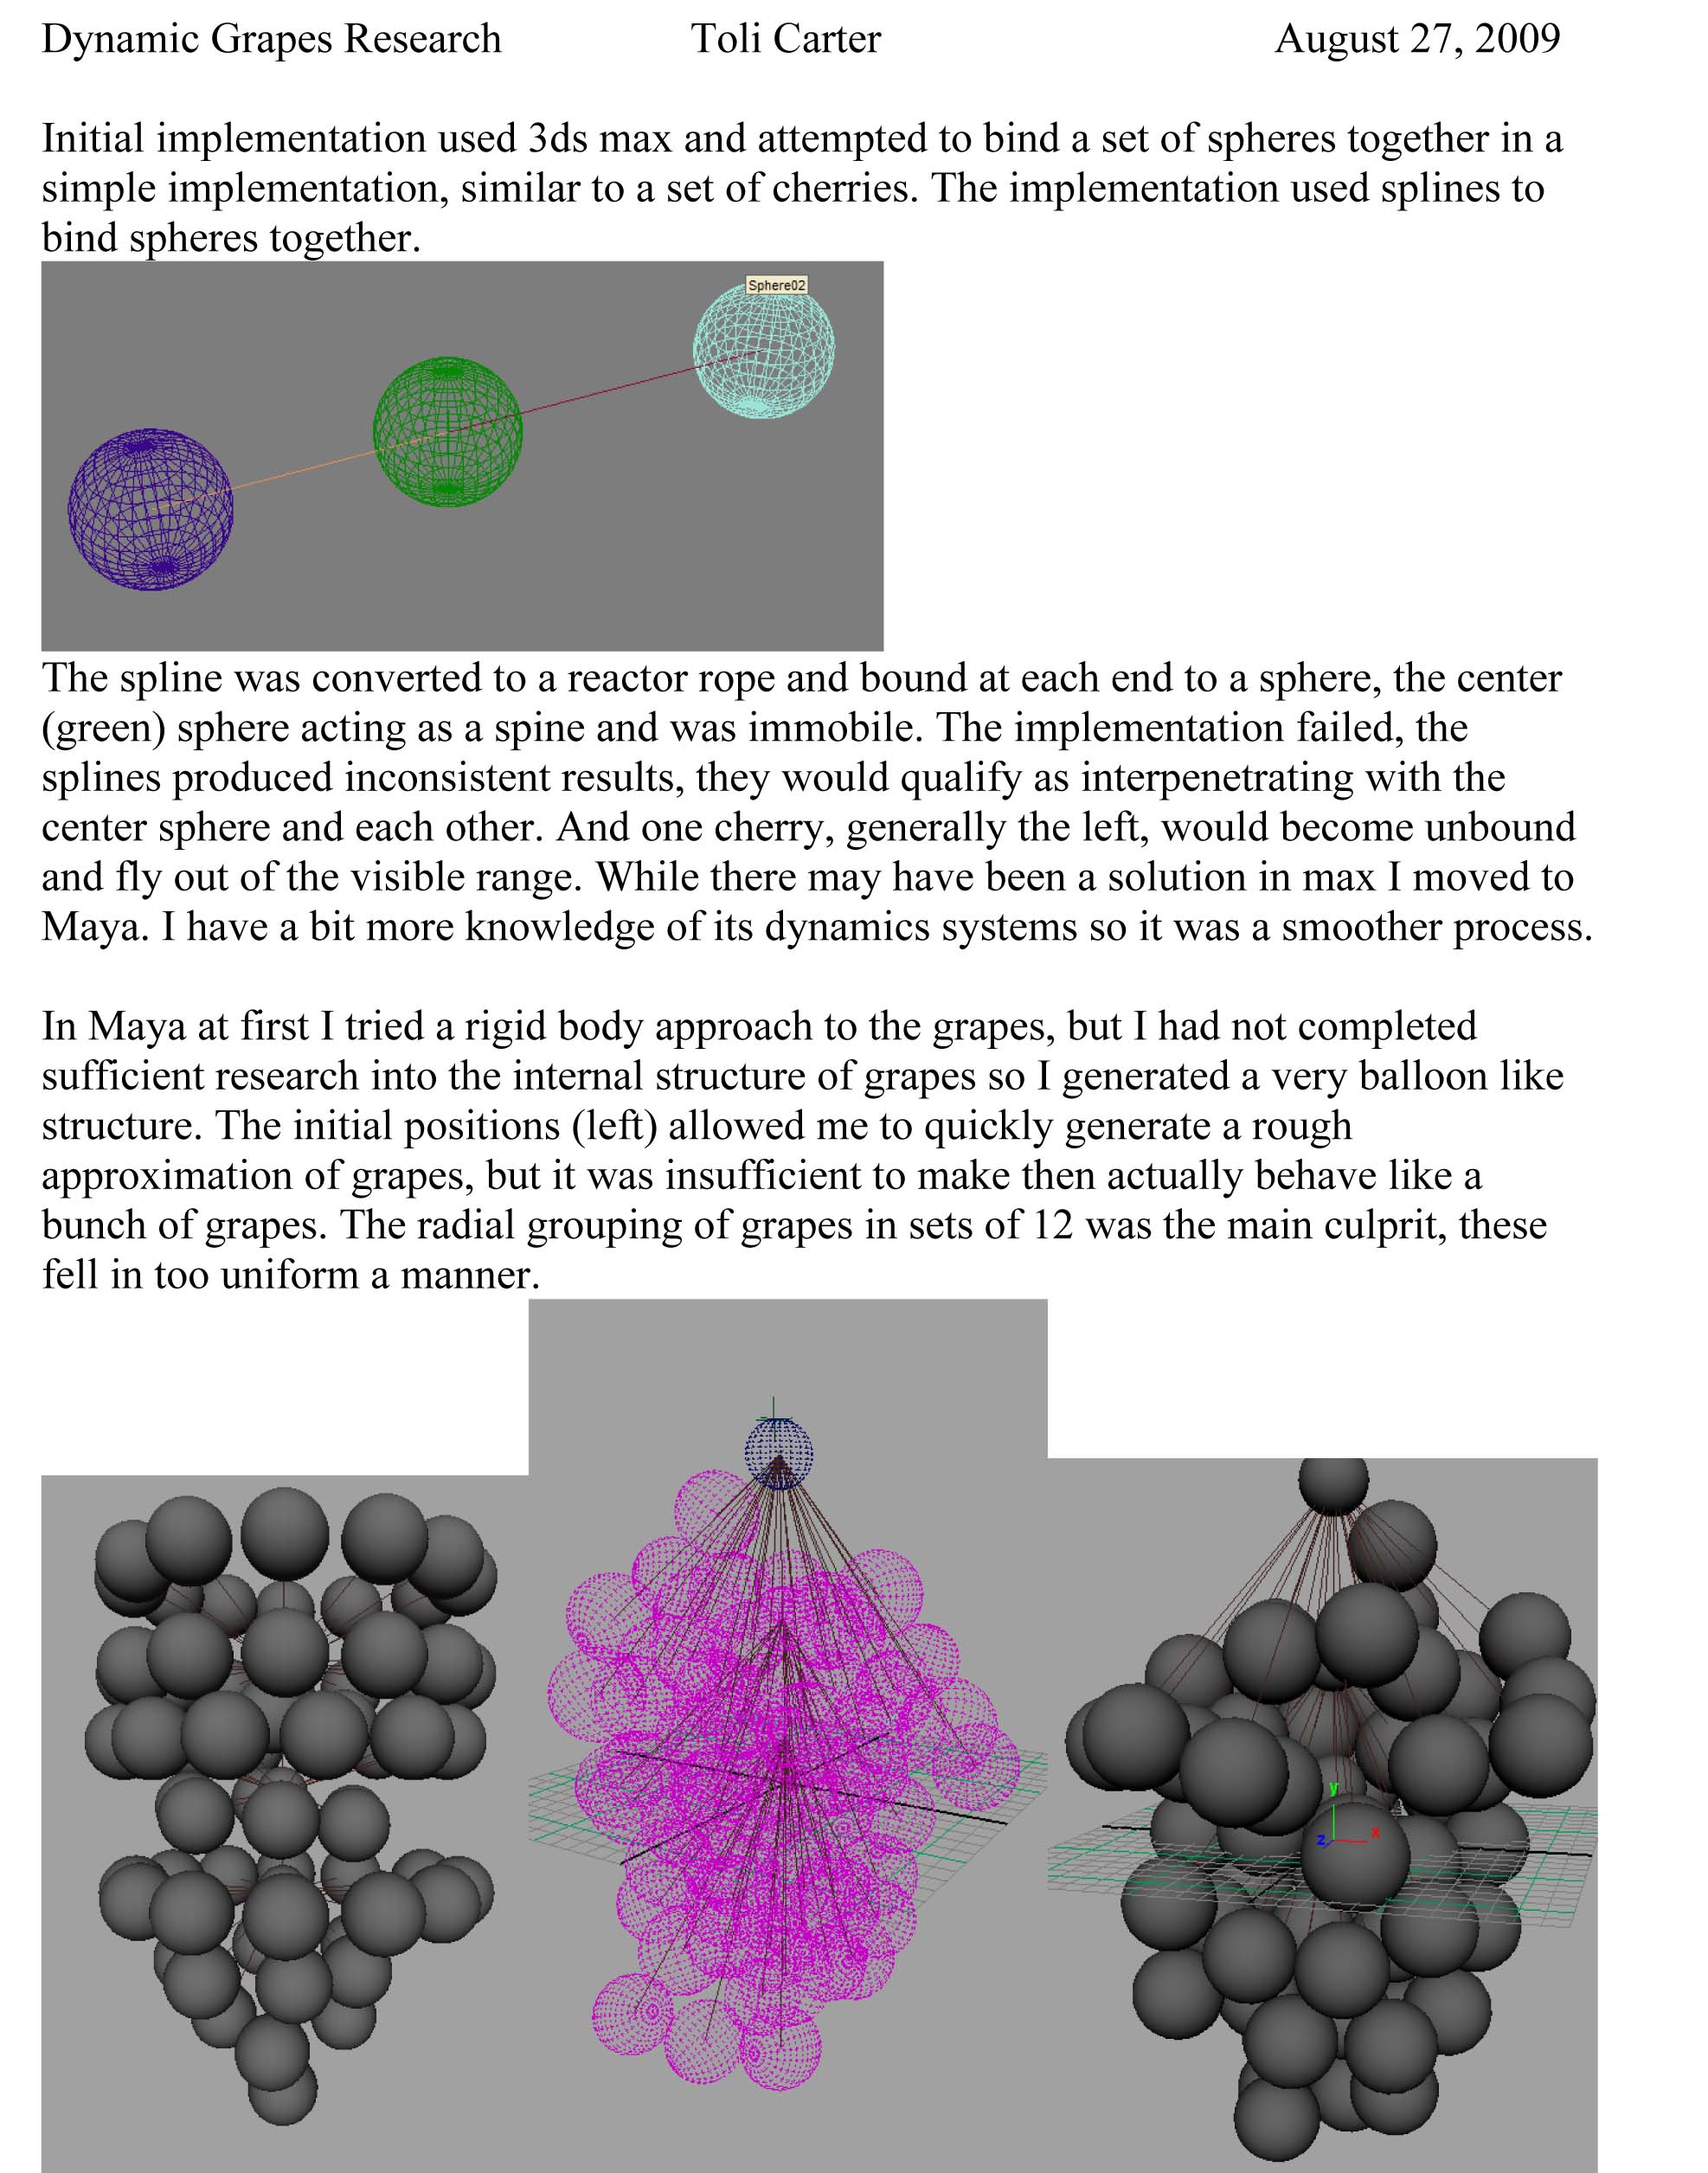 Dynamic Grapes Research-1